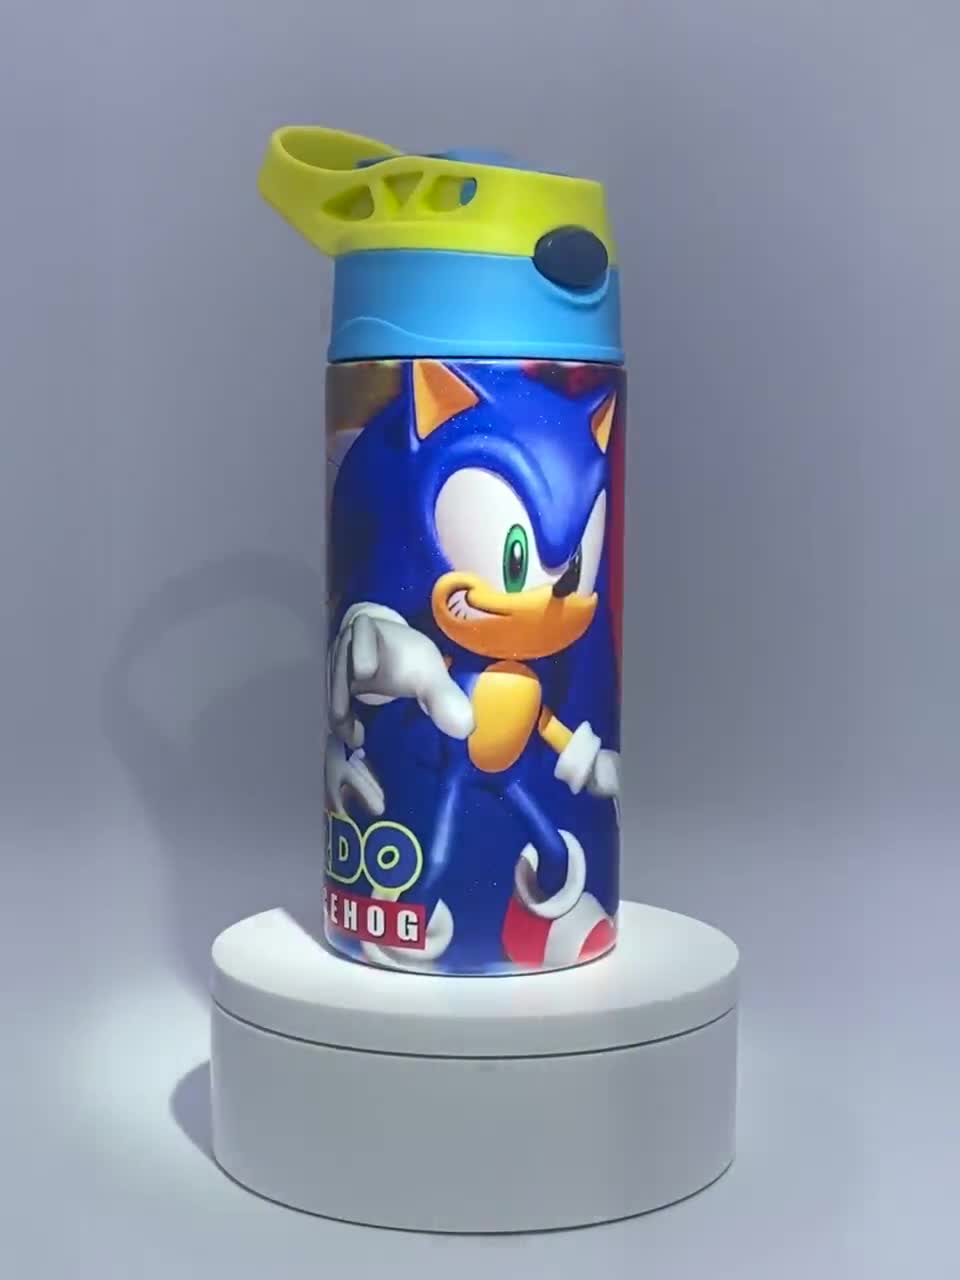 Sonic The Hedgehog Sticker Bomb Large Plastic Water Bottle